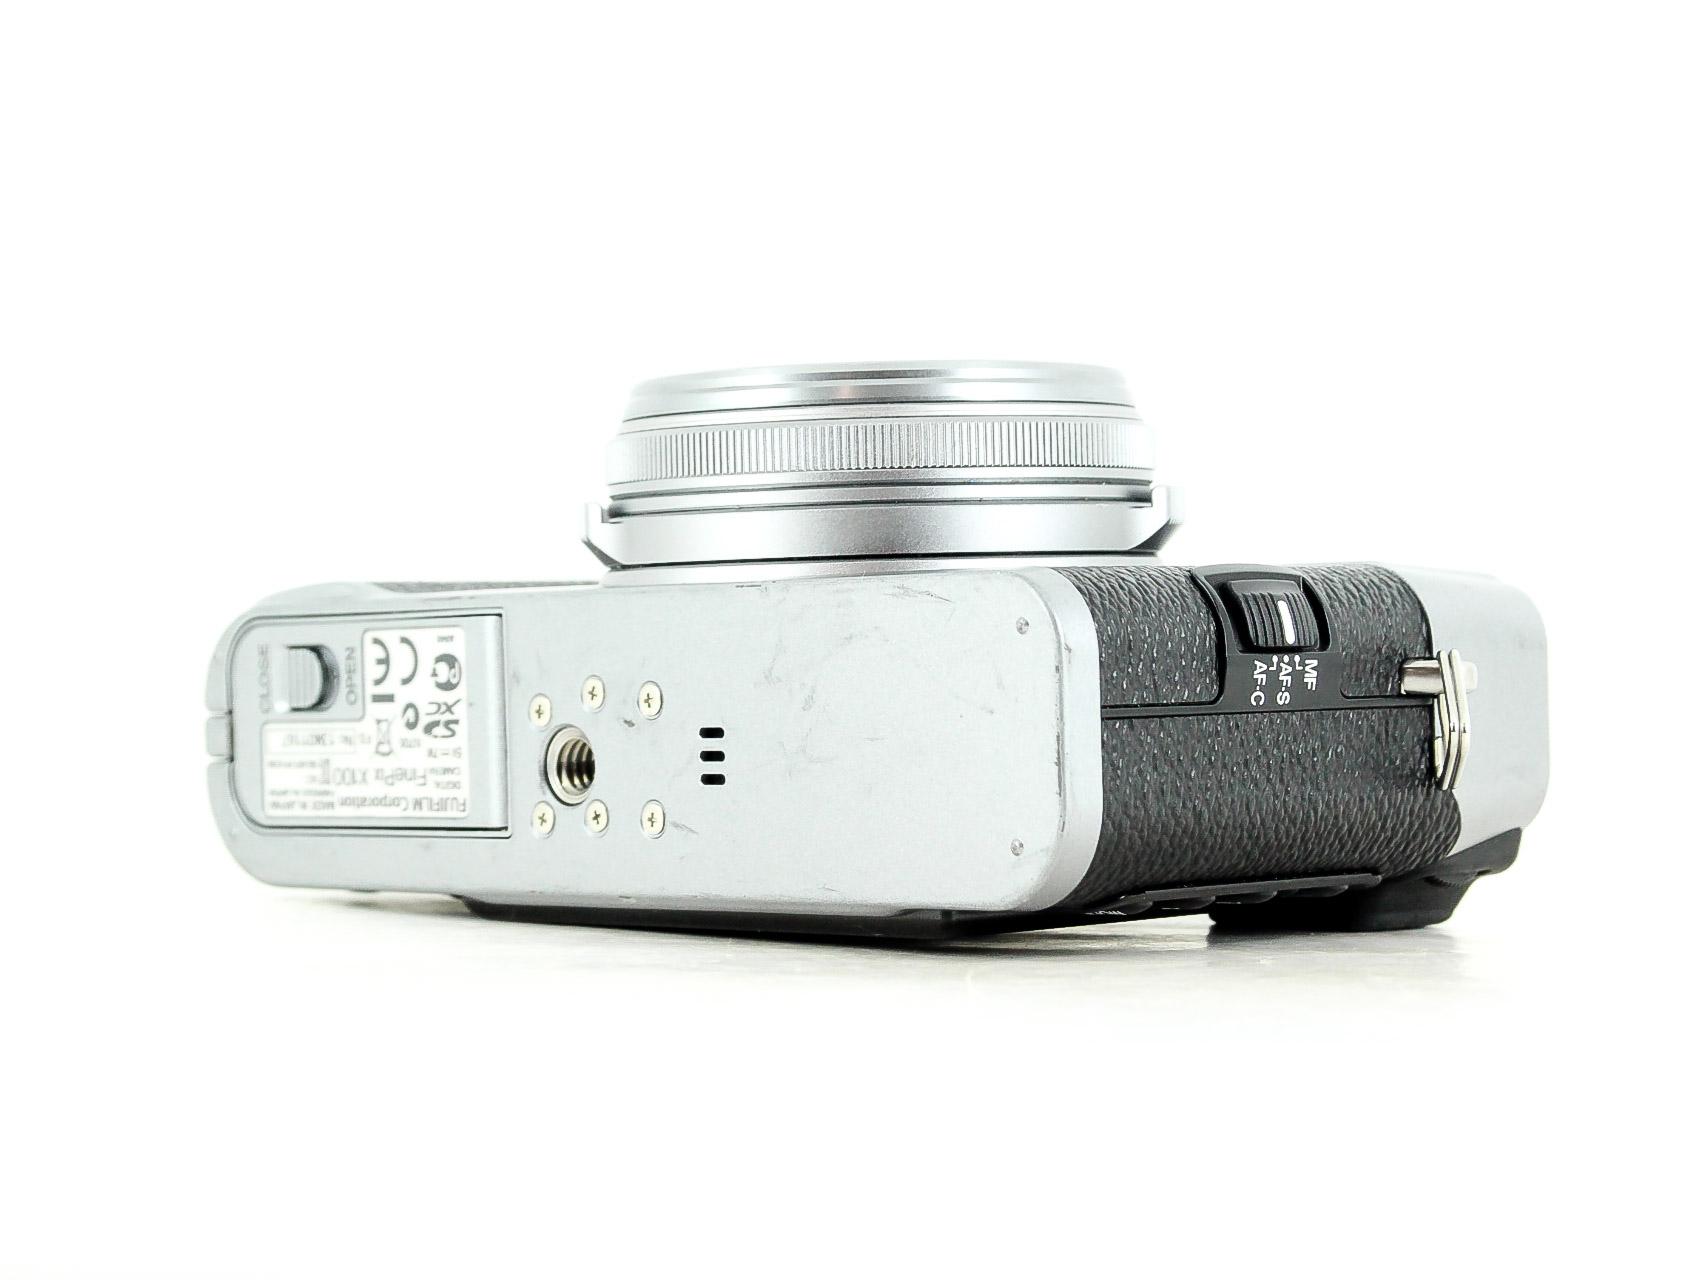 Fujifilm FinePix X100 12.3MP Digital Camera - Silver